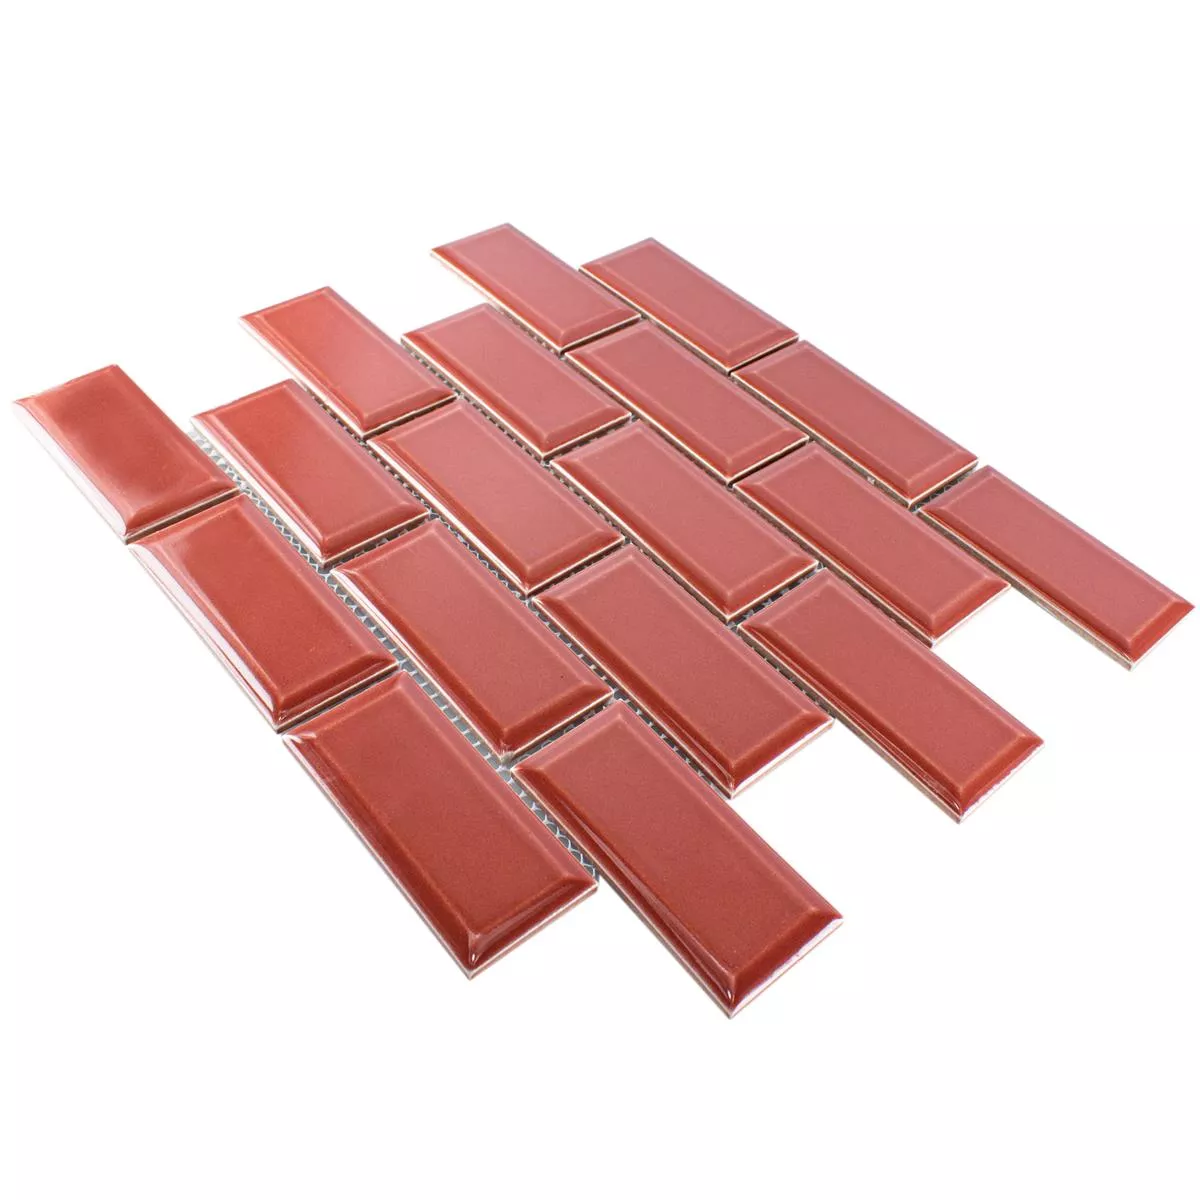 Sample Ceramic Mosaic Tiles StPauls Metro Facet Red